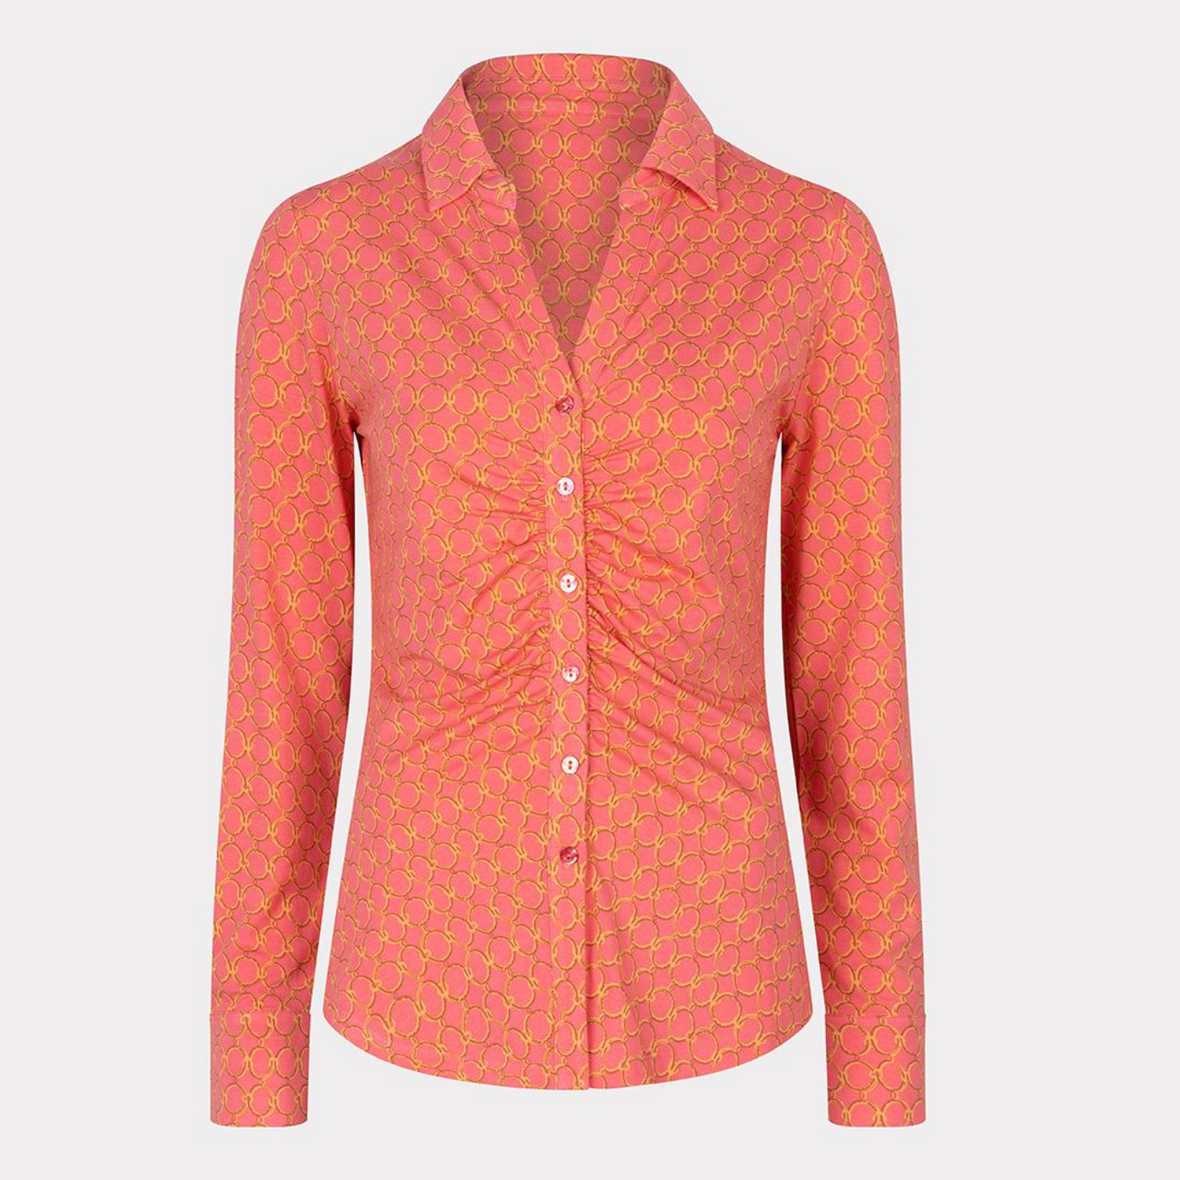 Esqualo blouse in coral colour